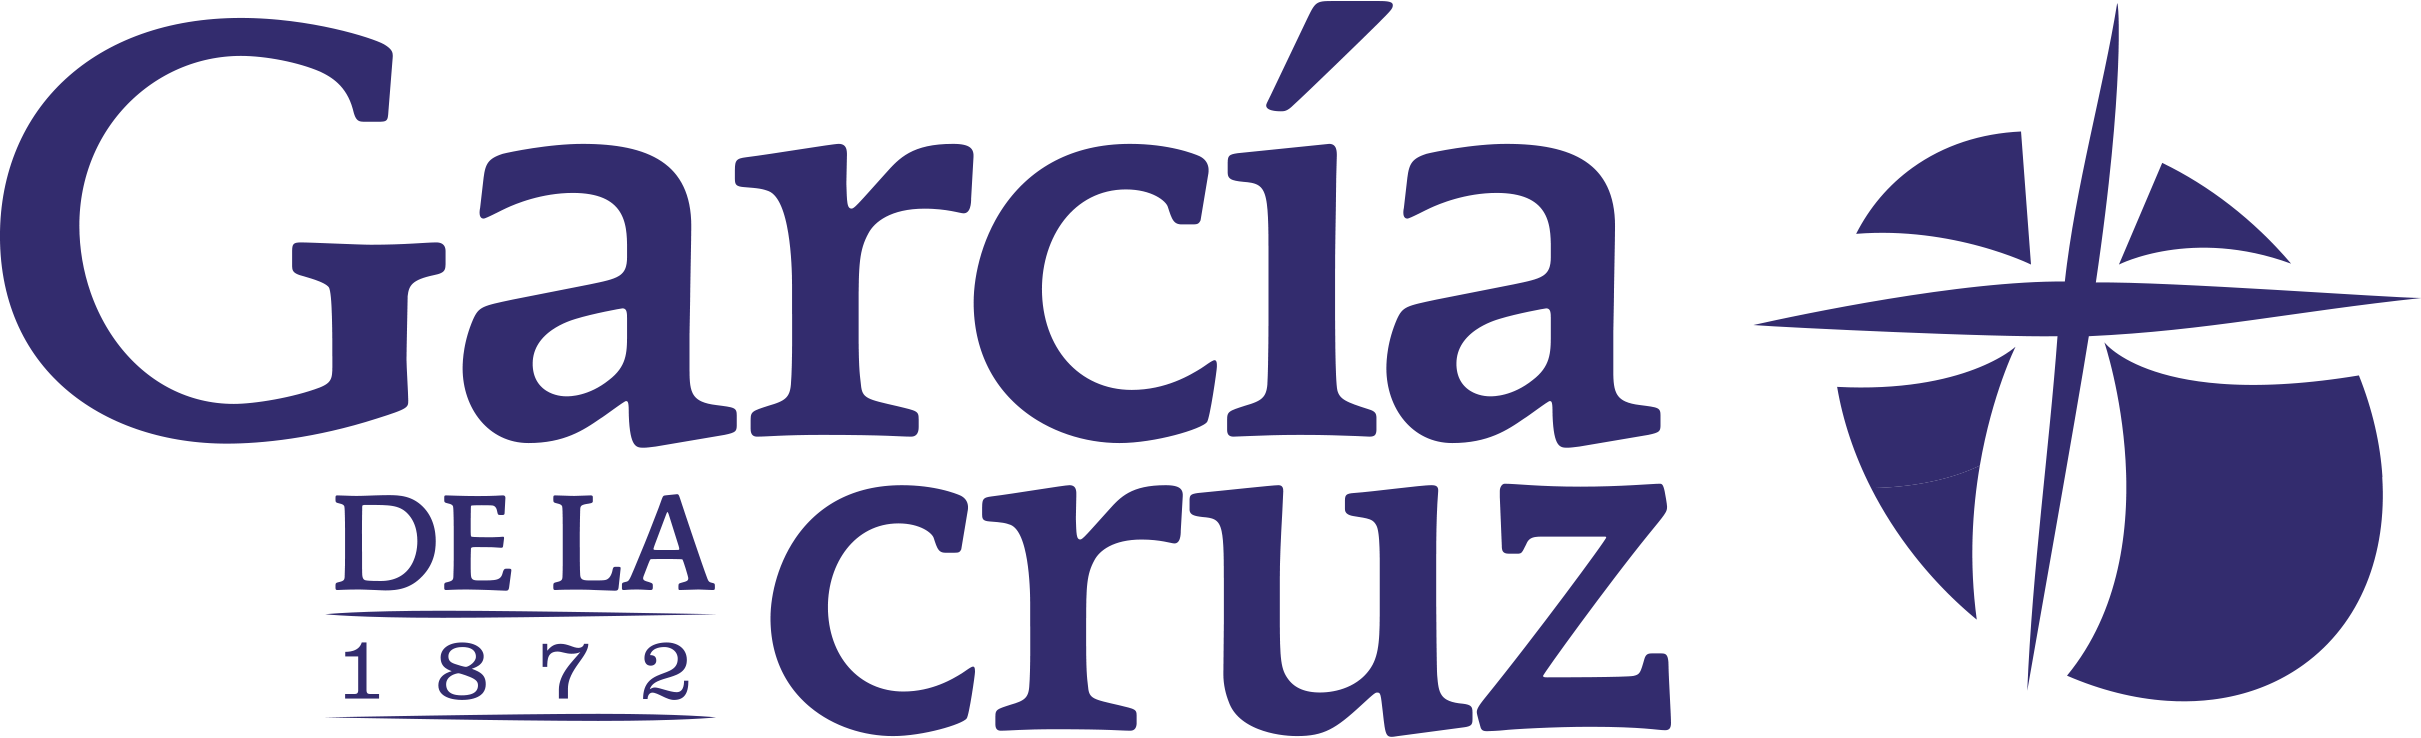 Garcia Cruz оливковое масло. Логотипы Garcia. Garcia de la Cruz масло оливковое. Де ла Круз лого. Масло garcia de la cruz